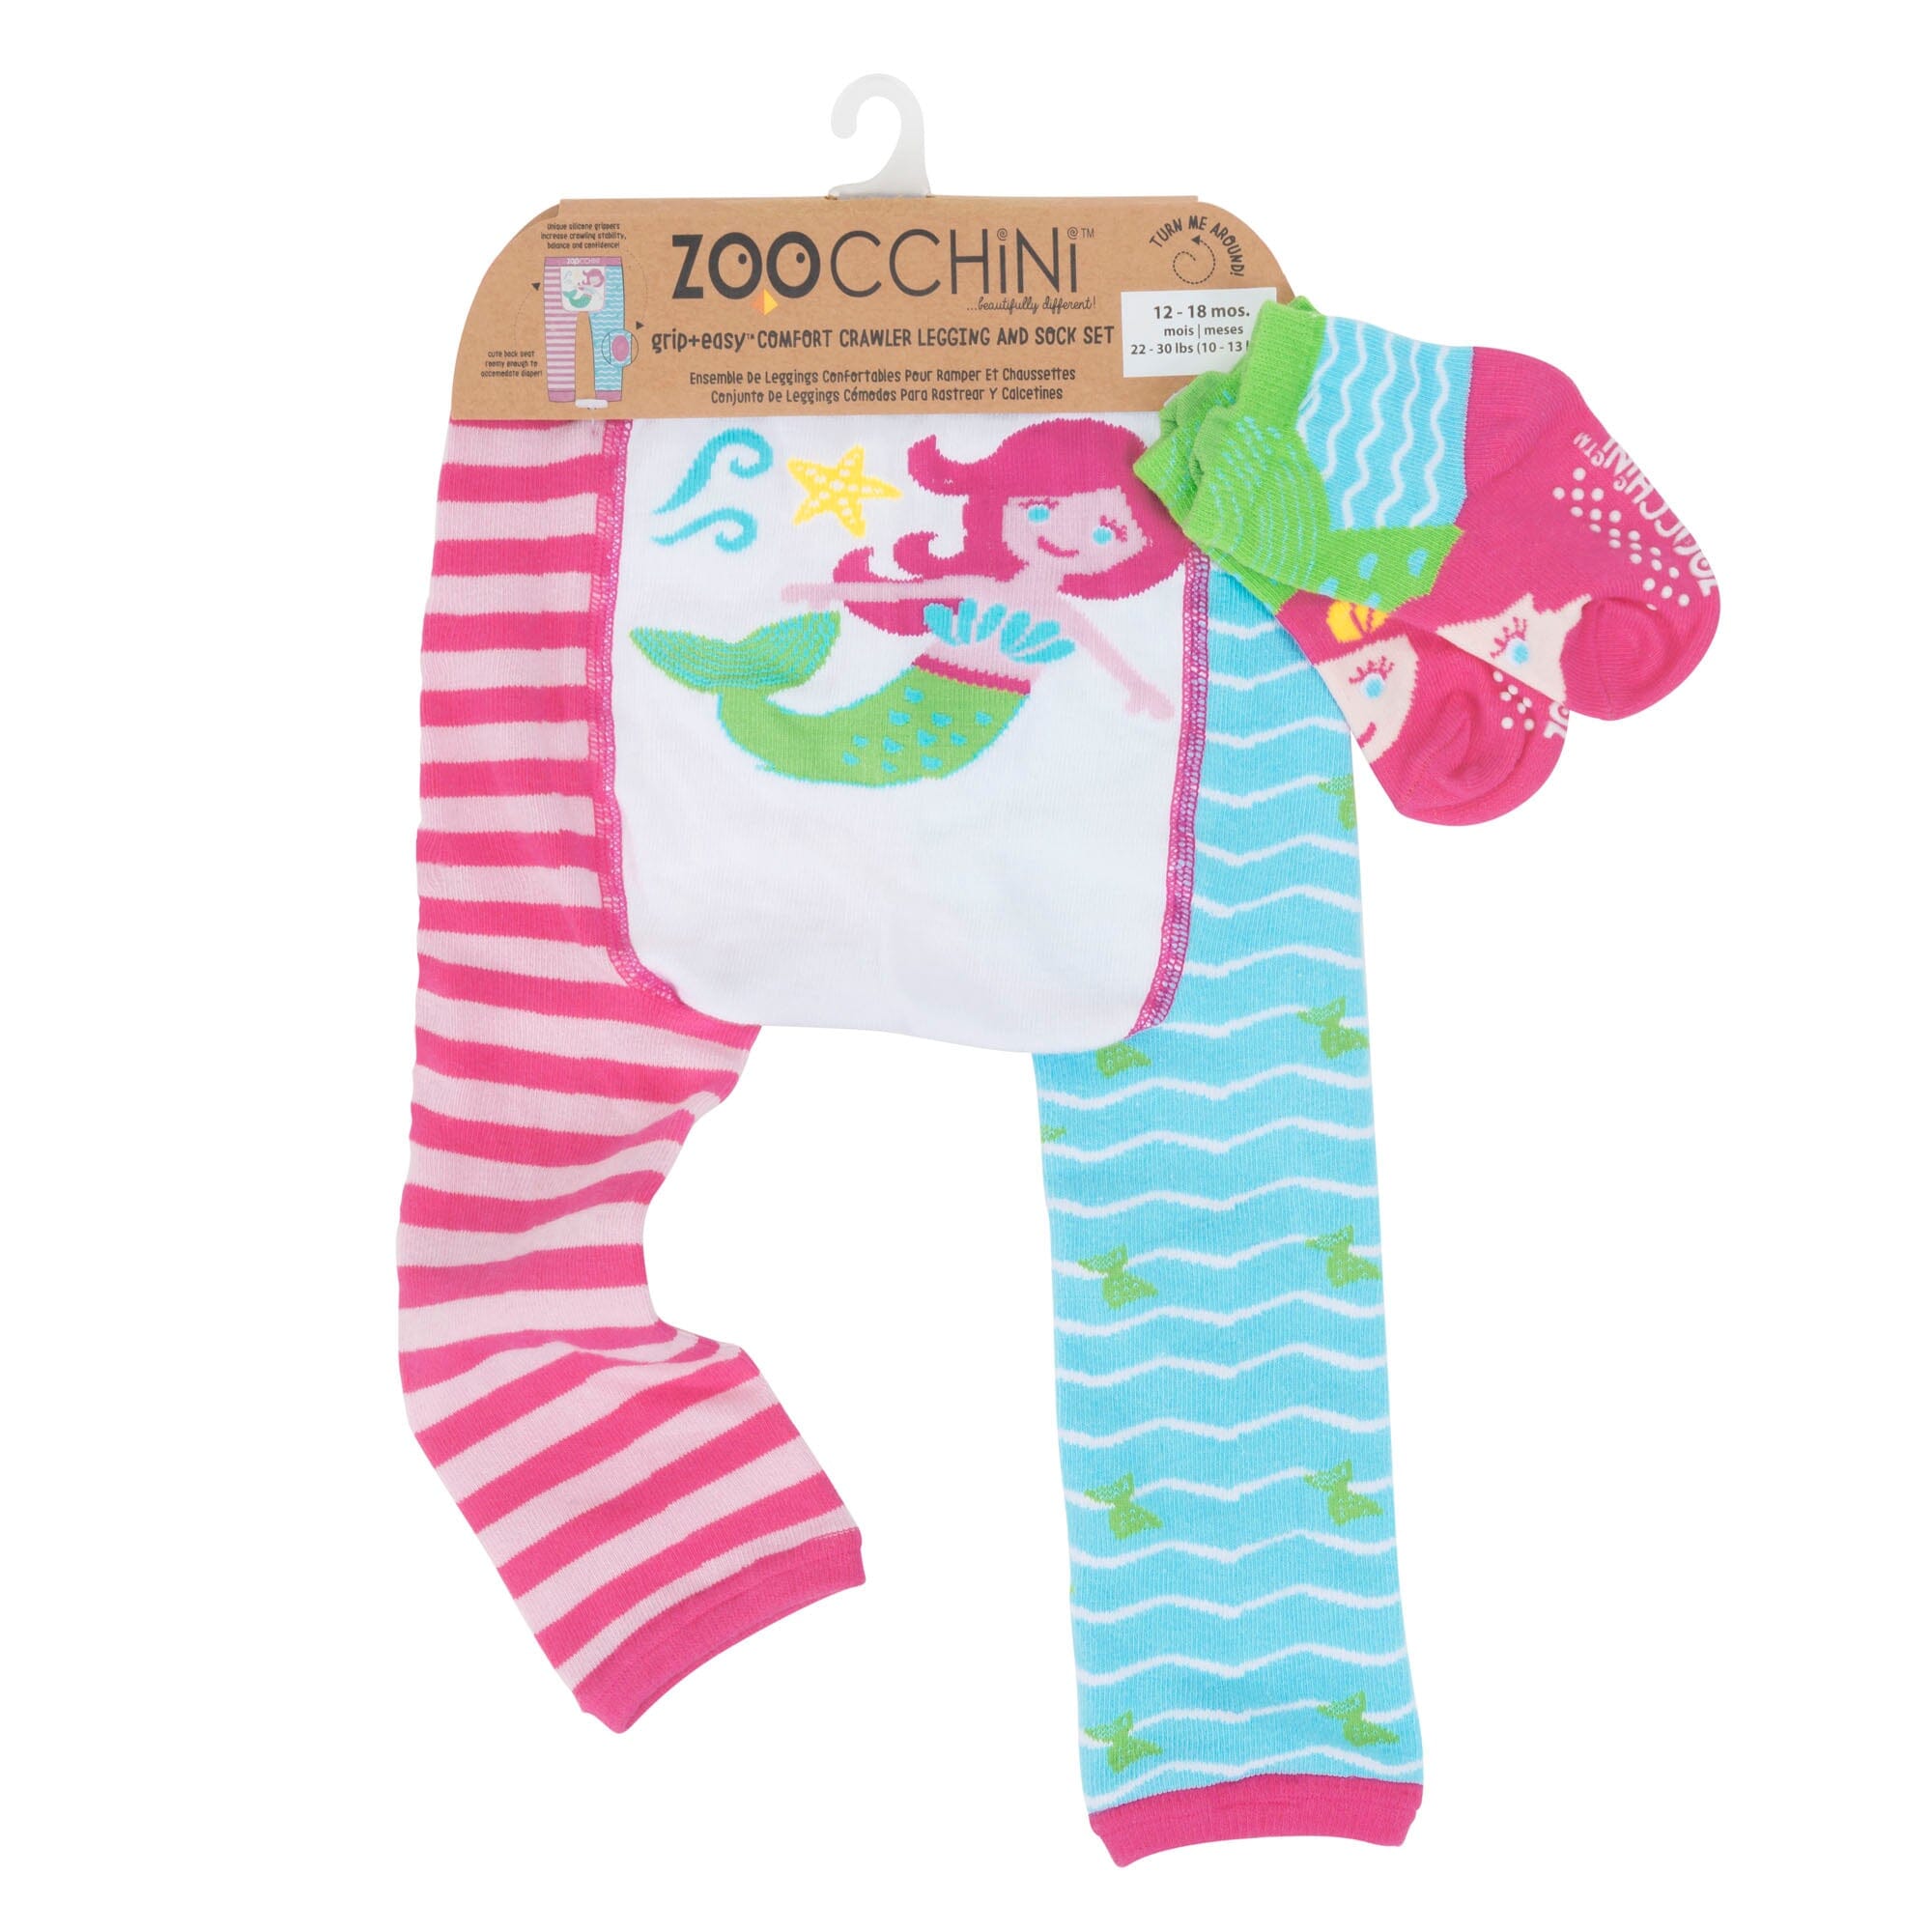 ZOOCCHINI grip+easy Comfort Crawler Legging & Socks Set - Dai the